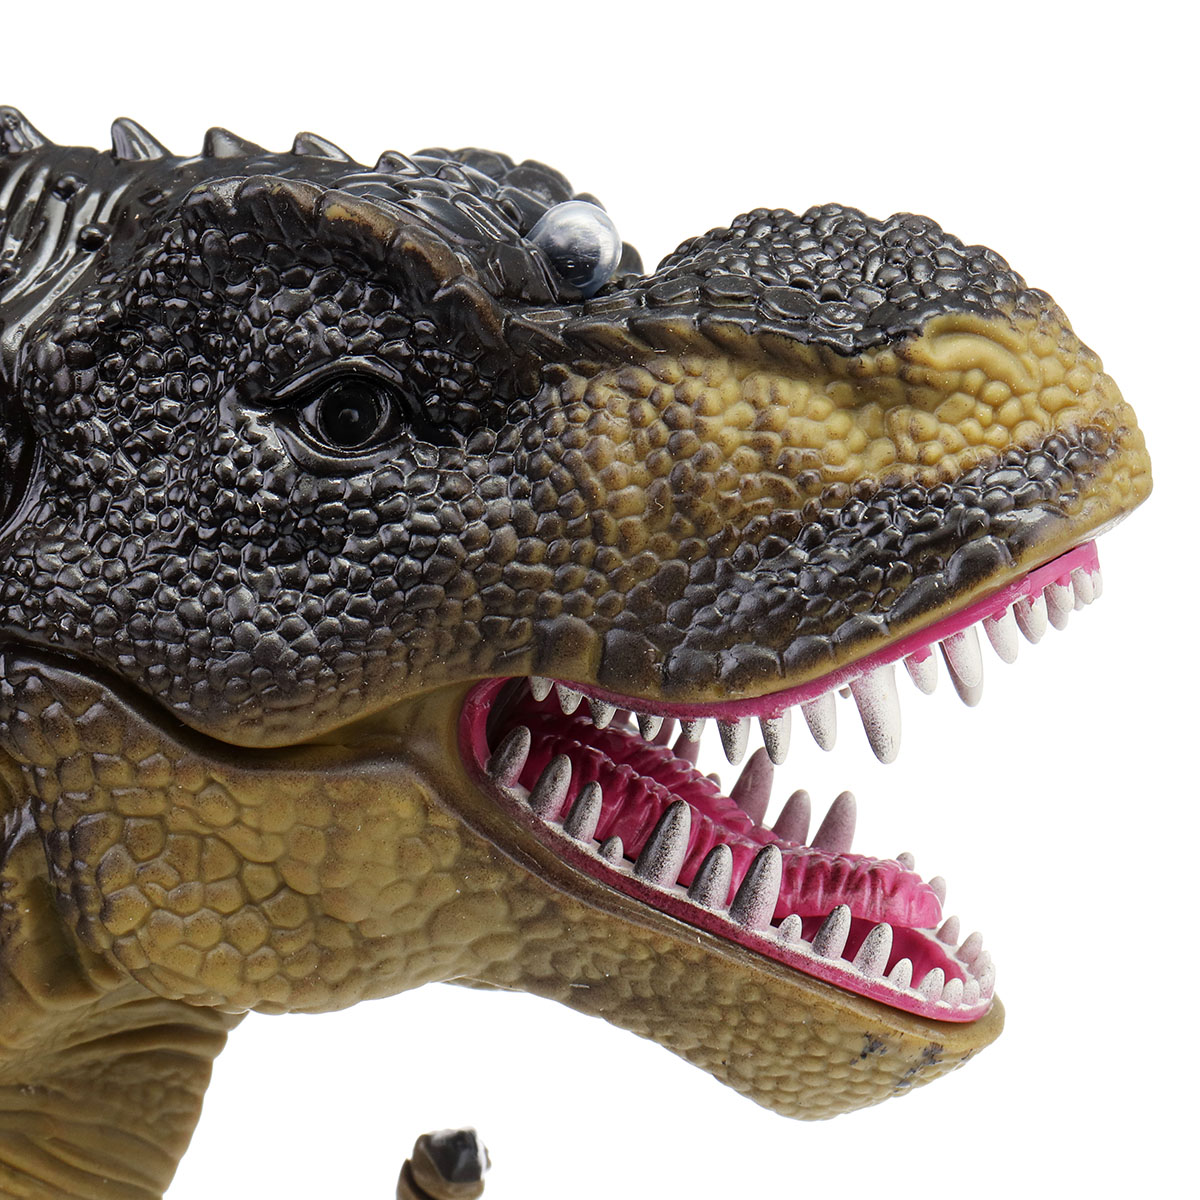 Walking-Dinosaur-Spinosaurus-Light-Up-Kids-Toys-Figure-Sounds-Real-Movement-LED-1430538-8